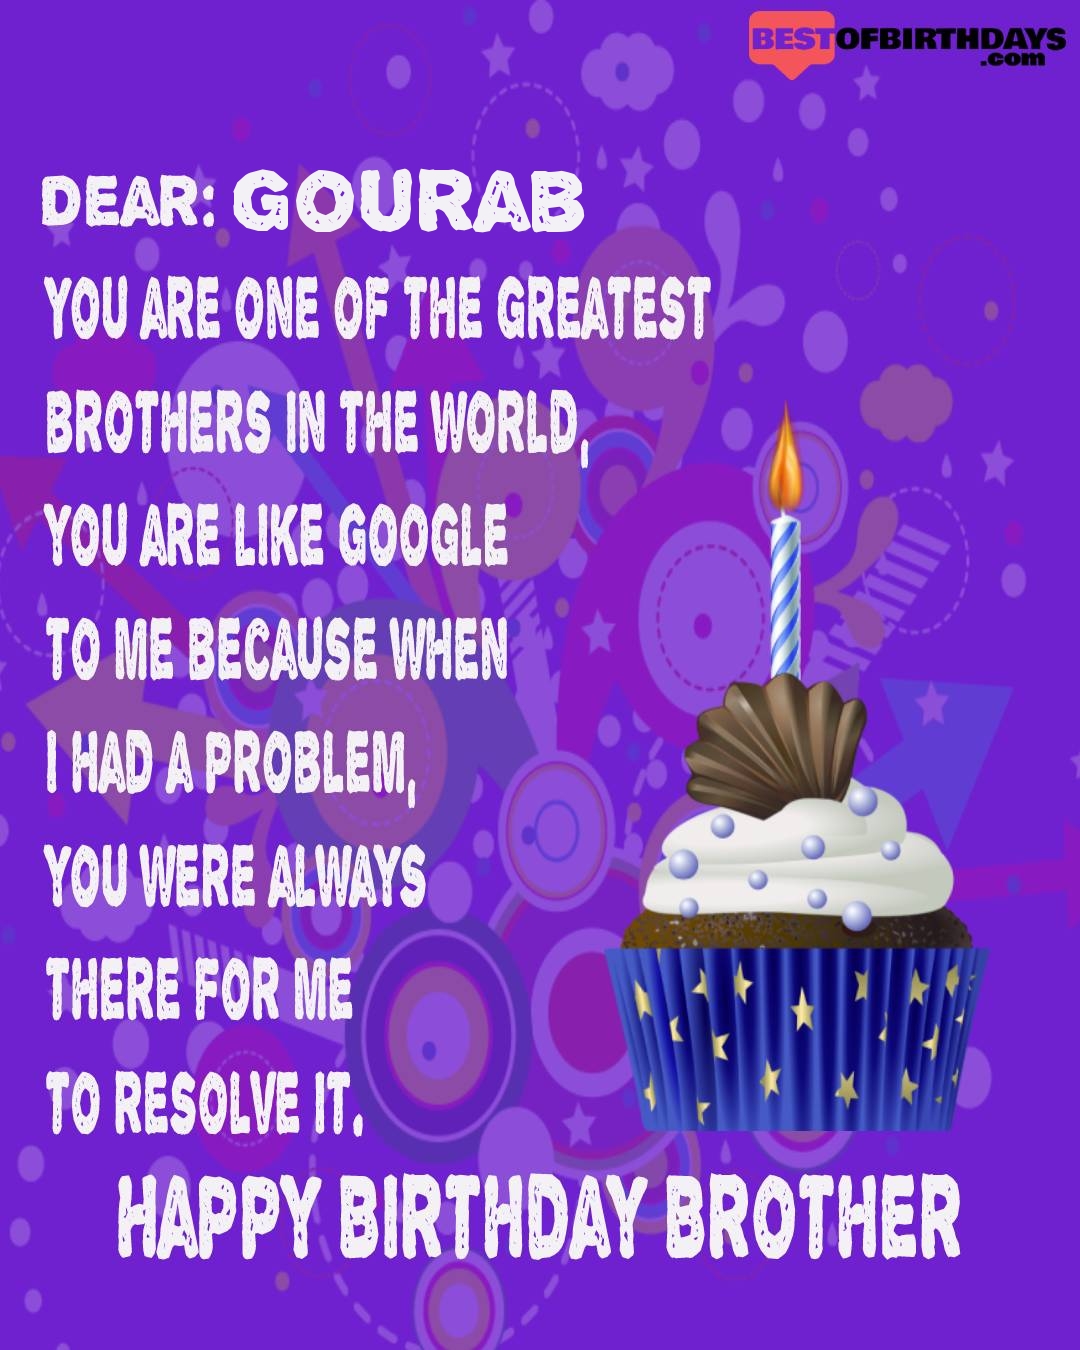 Happy birthday gourab bhai brother bro